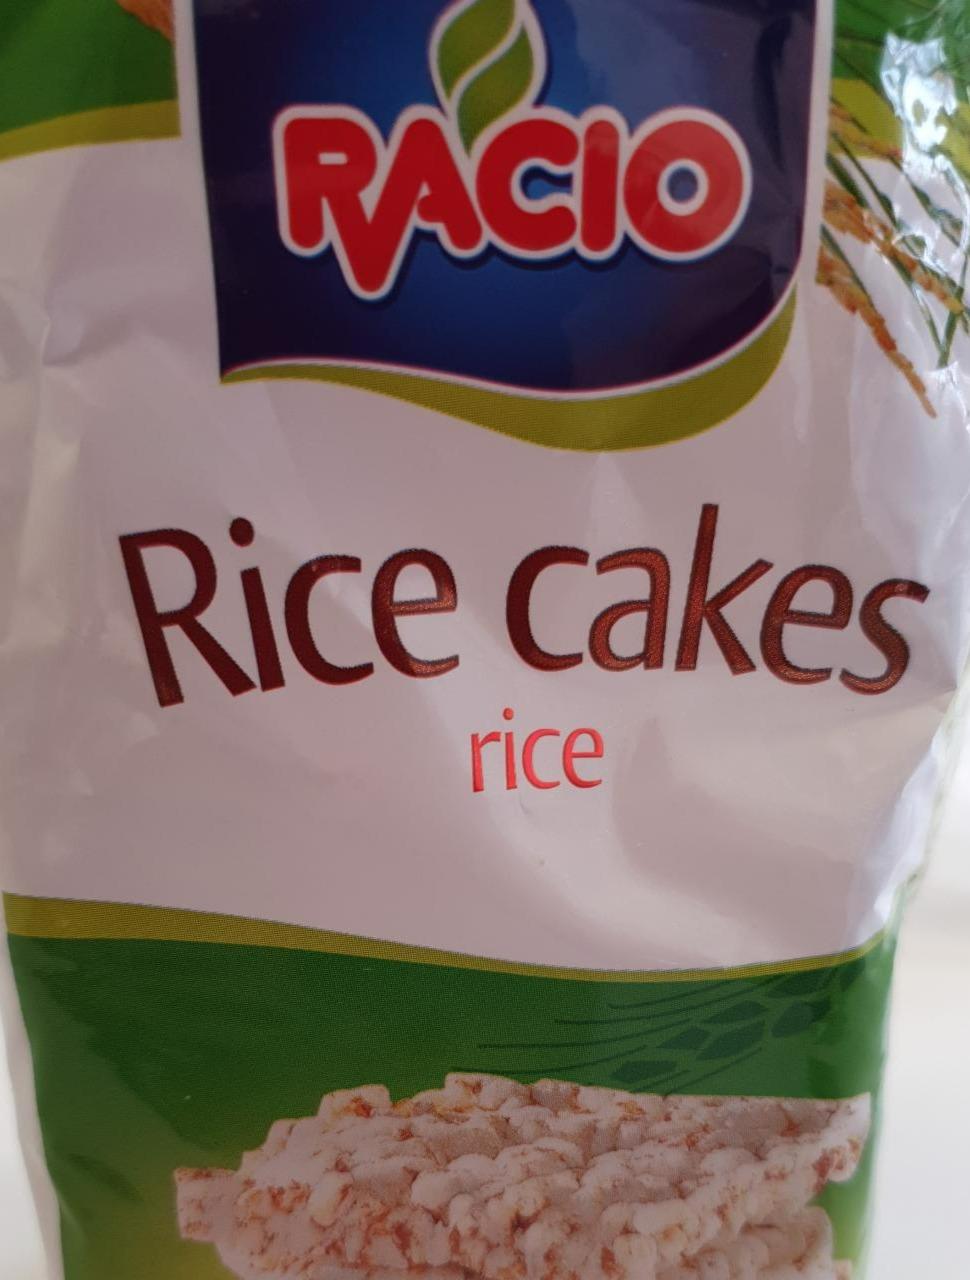 Fotografie - Rice cakes rice Racio